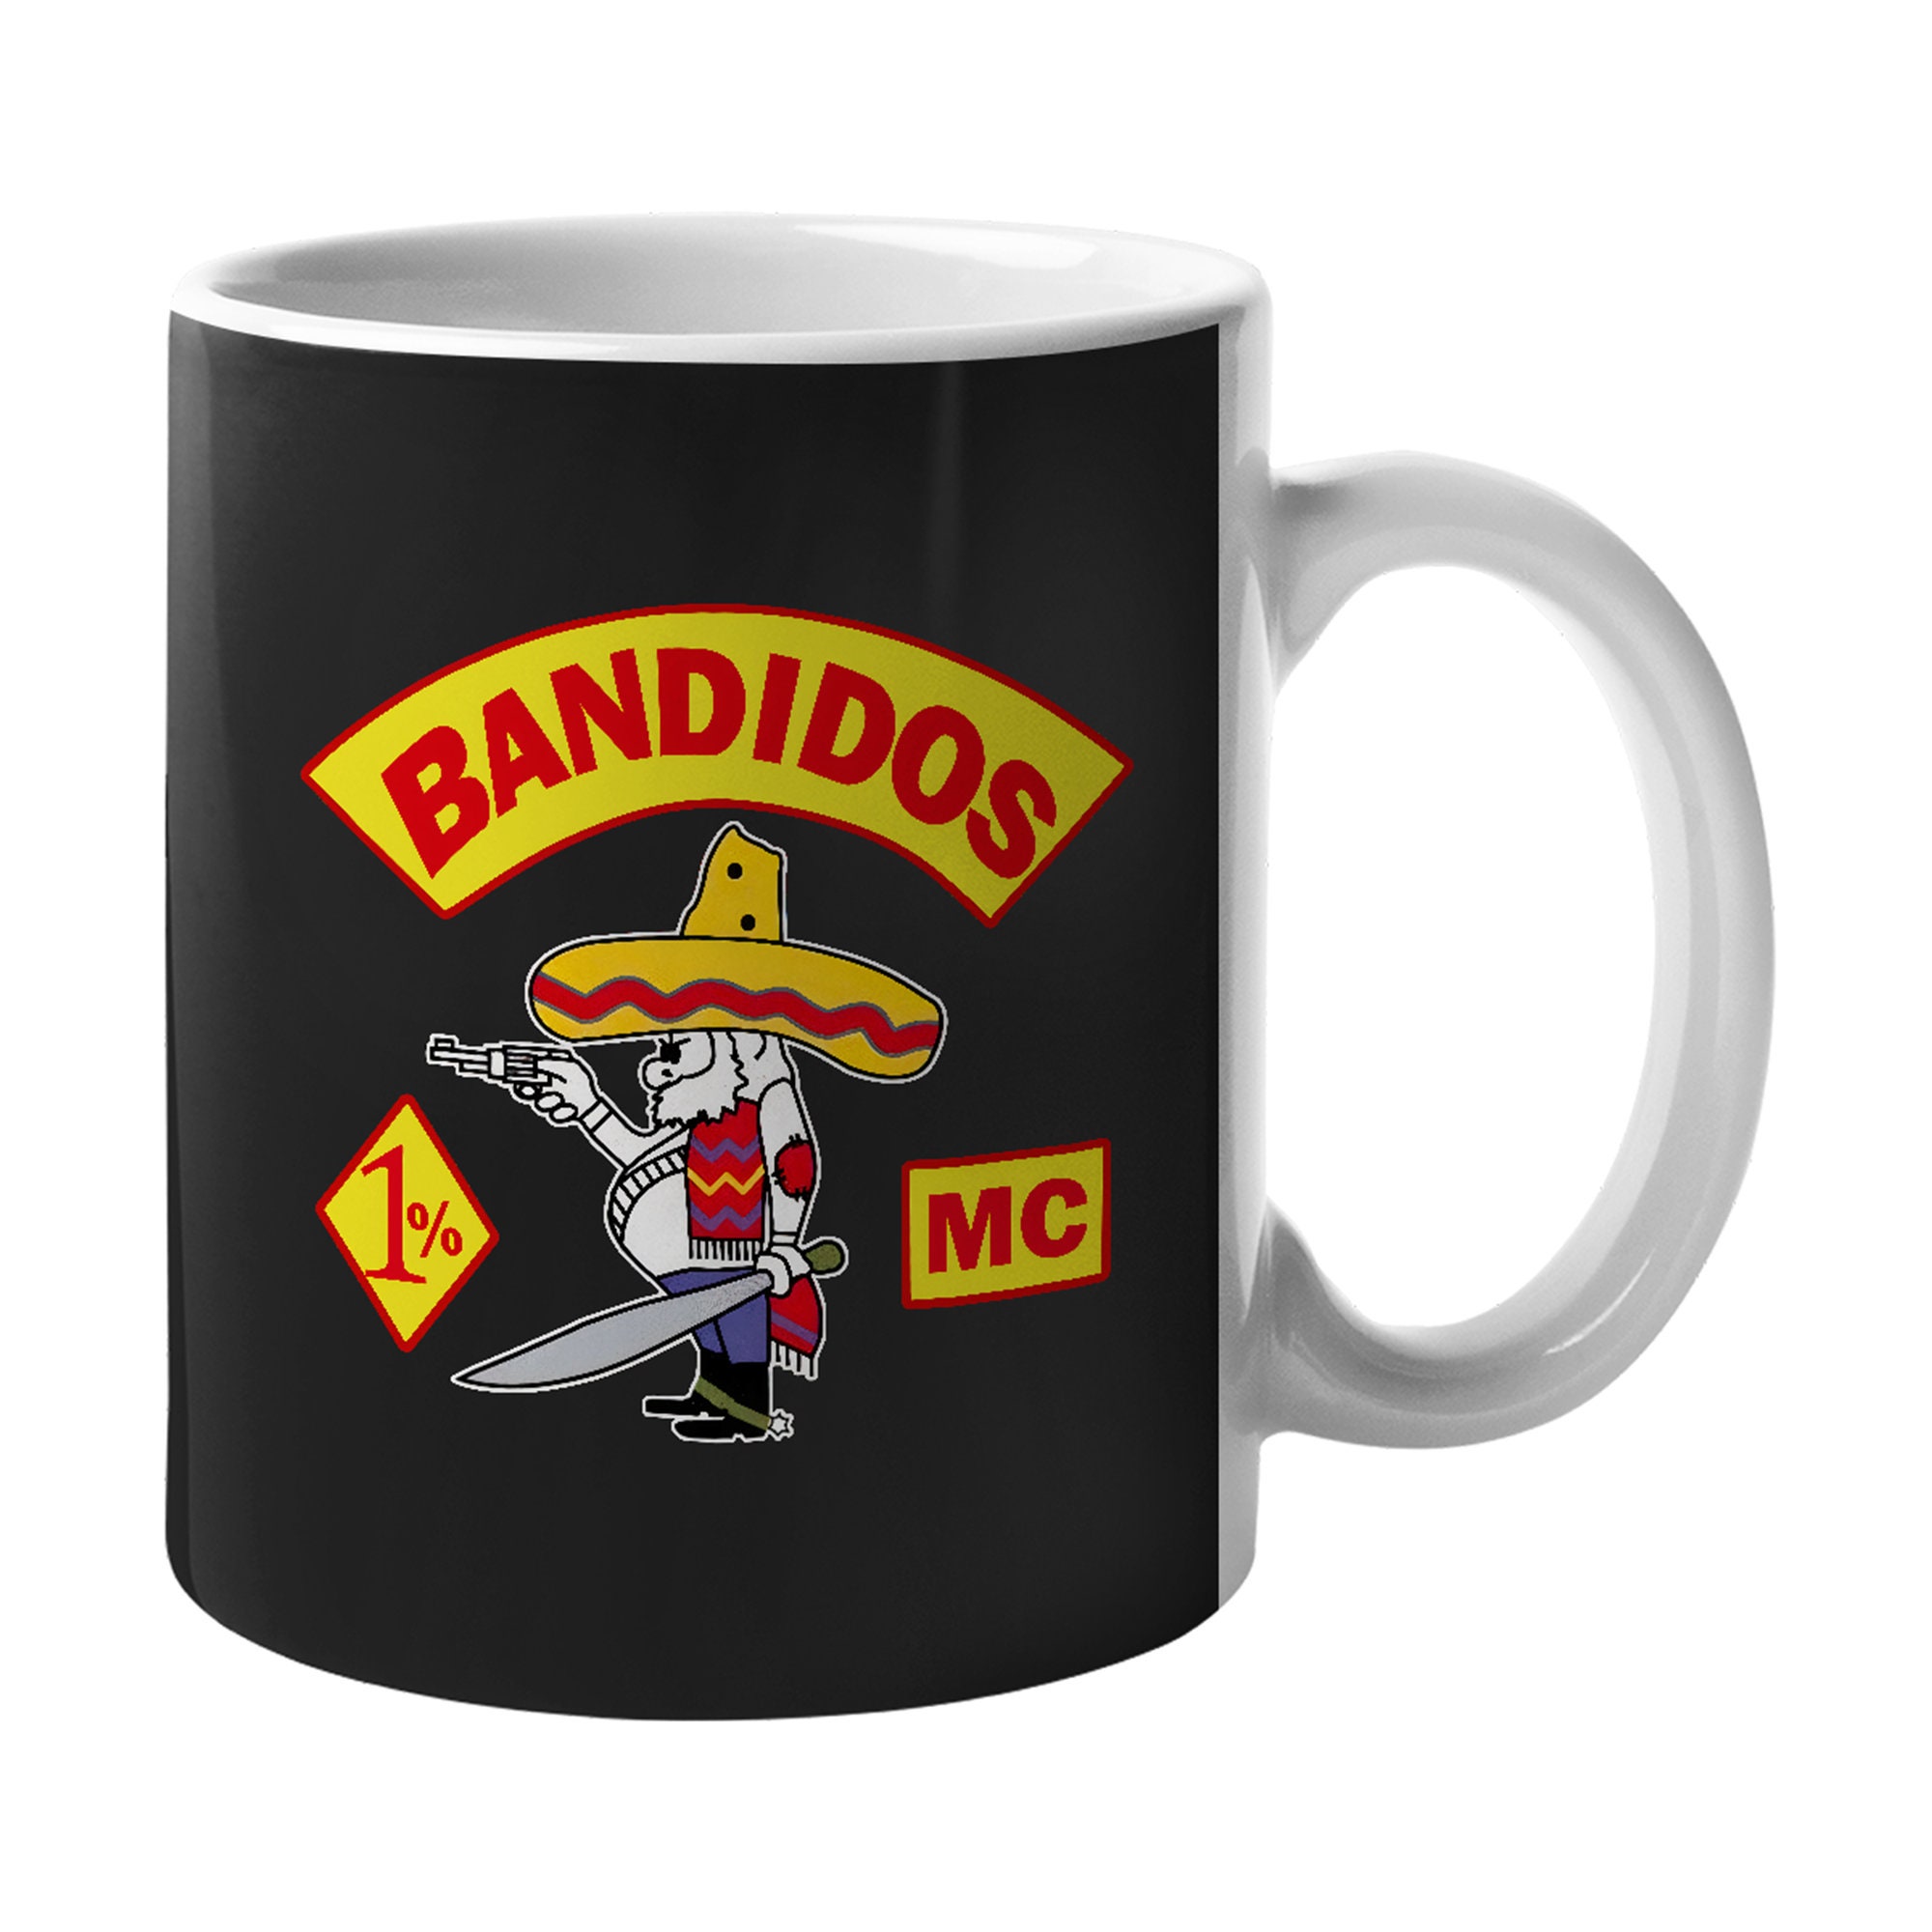 Discover Bandidos Motorcycle Club Mug Motorcycle Coffee Mug Biker Club Coffee Cup Gift for Biker